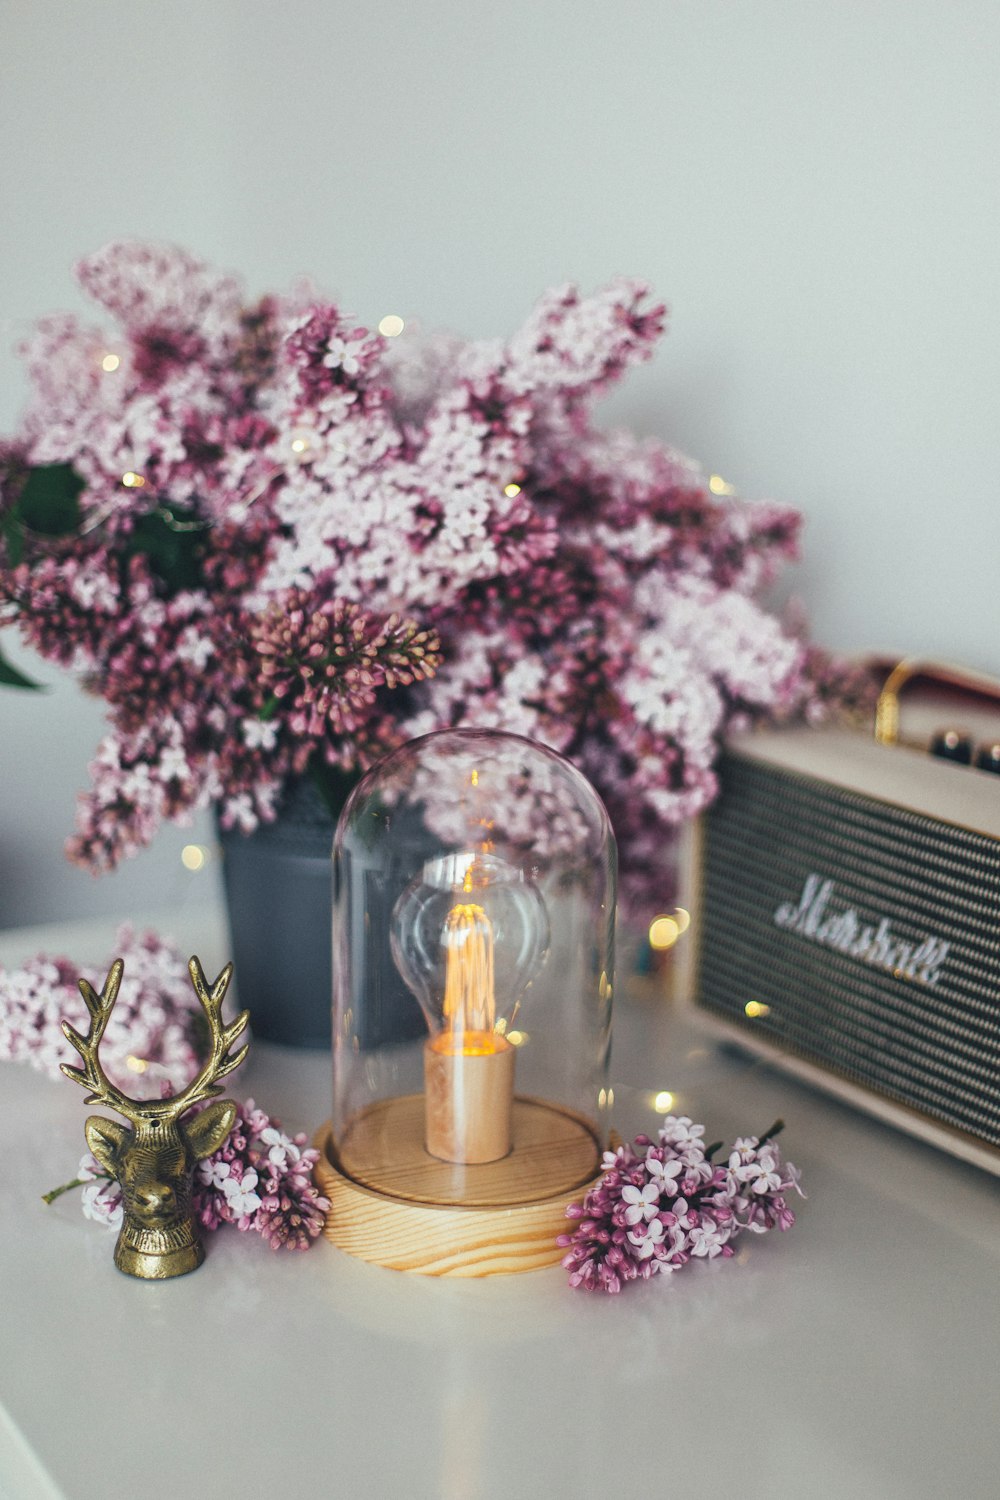 pink and purple flowers beside brown Marshall guitar head amplifier